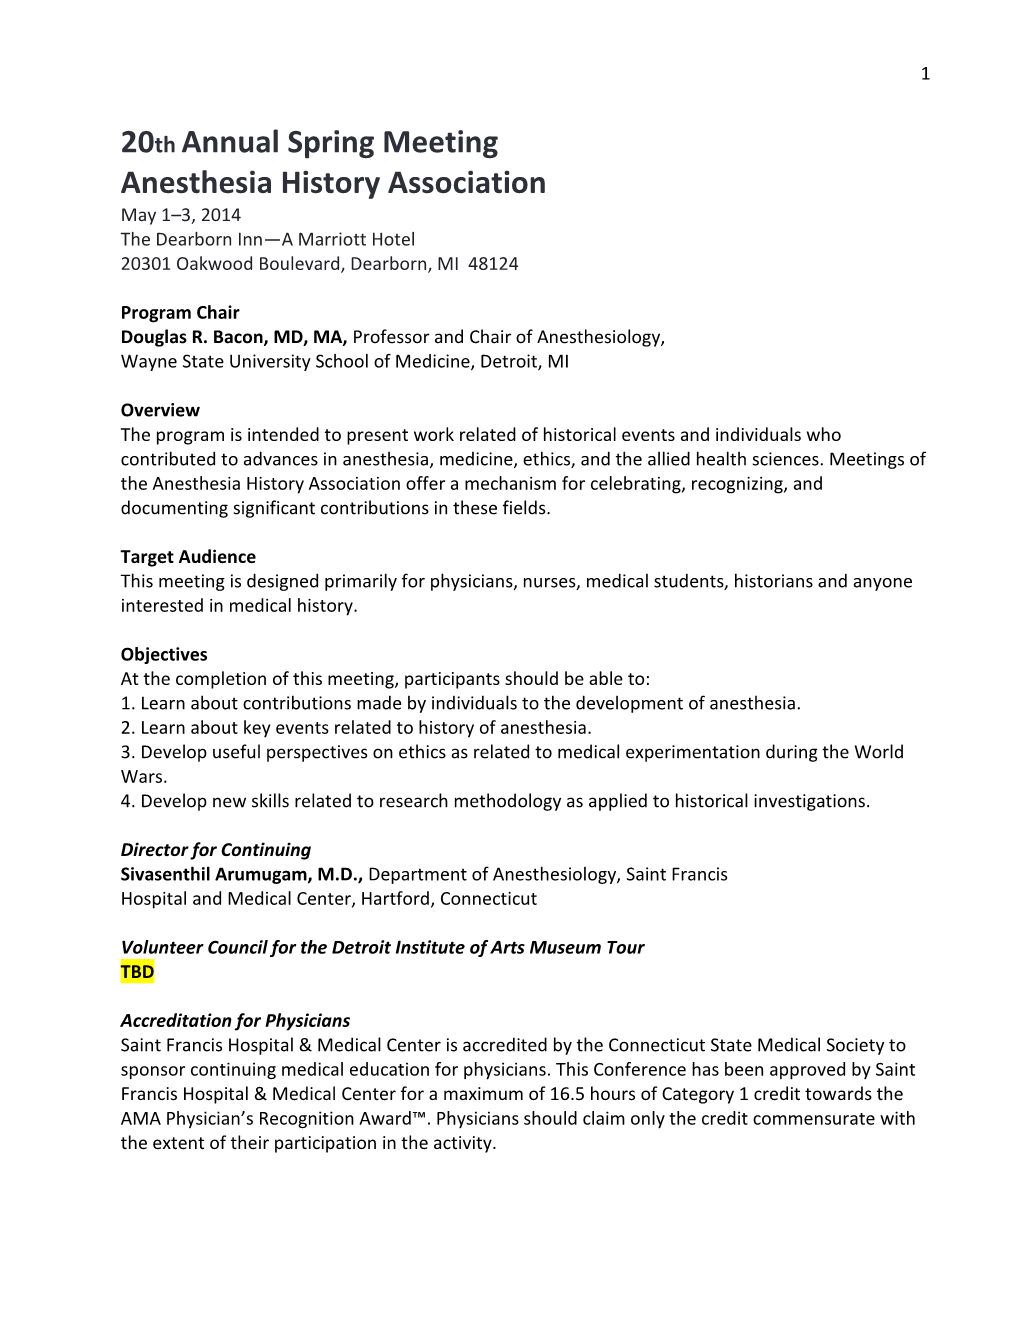 20Th Annual Spring Meeting Anesthesia History Association May 1–3, 2014 the Dearborn Inn—A Marriott Hotel 20301 Oakwood Boulevard, Dearborn, MI 48124